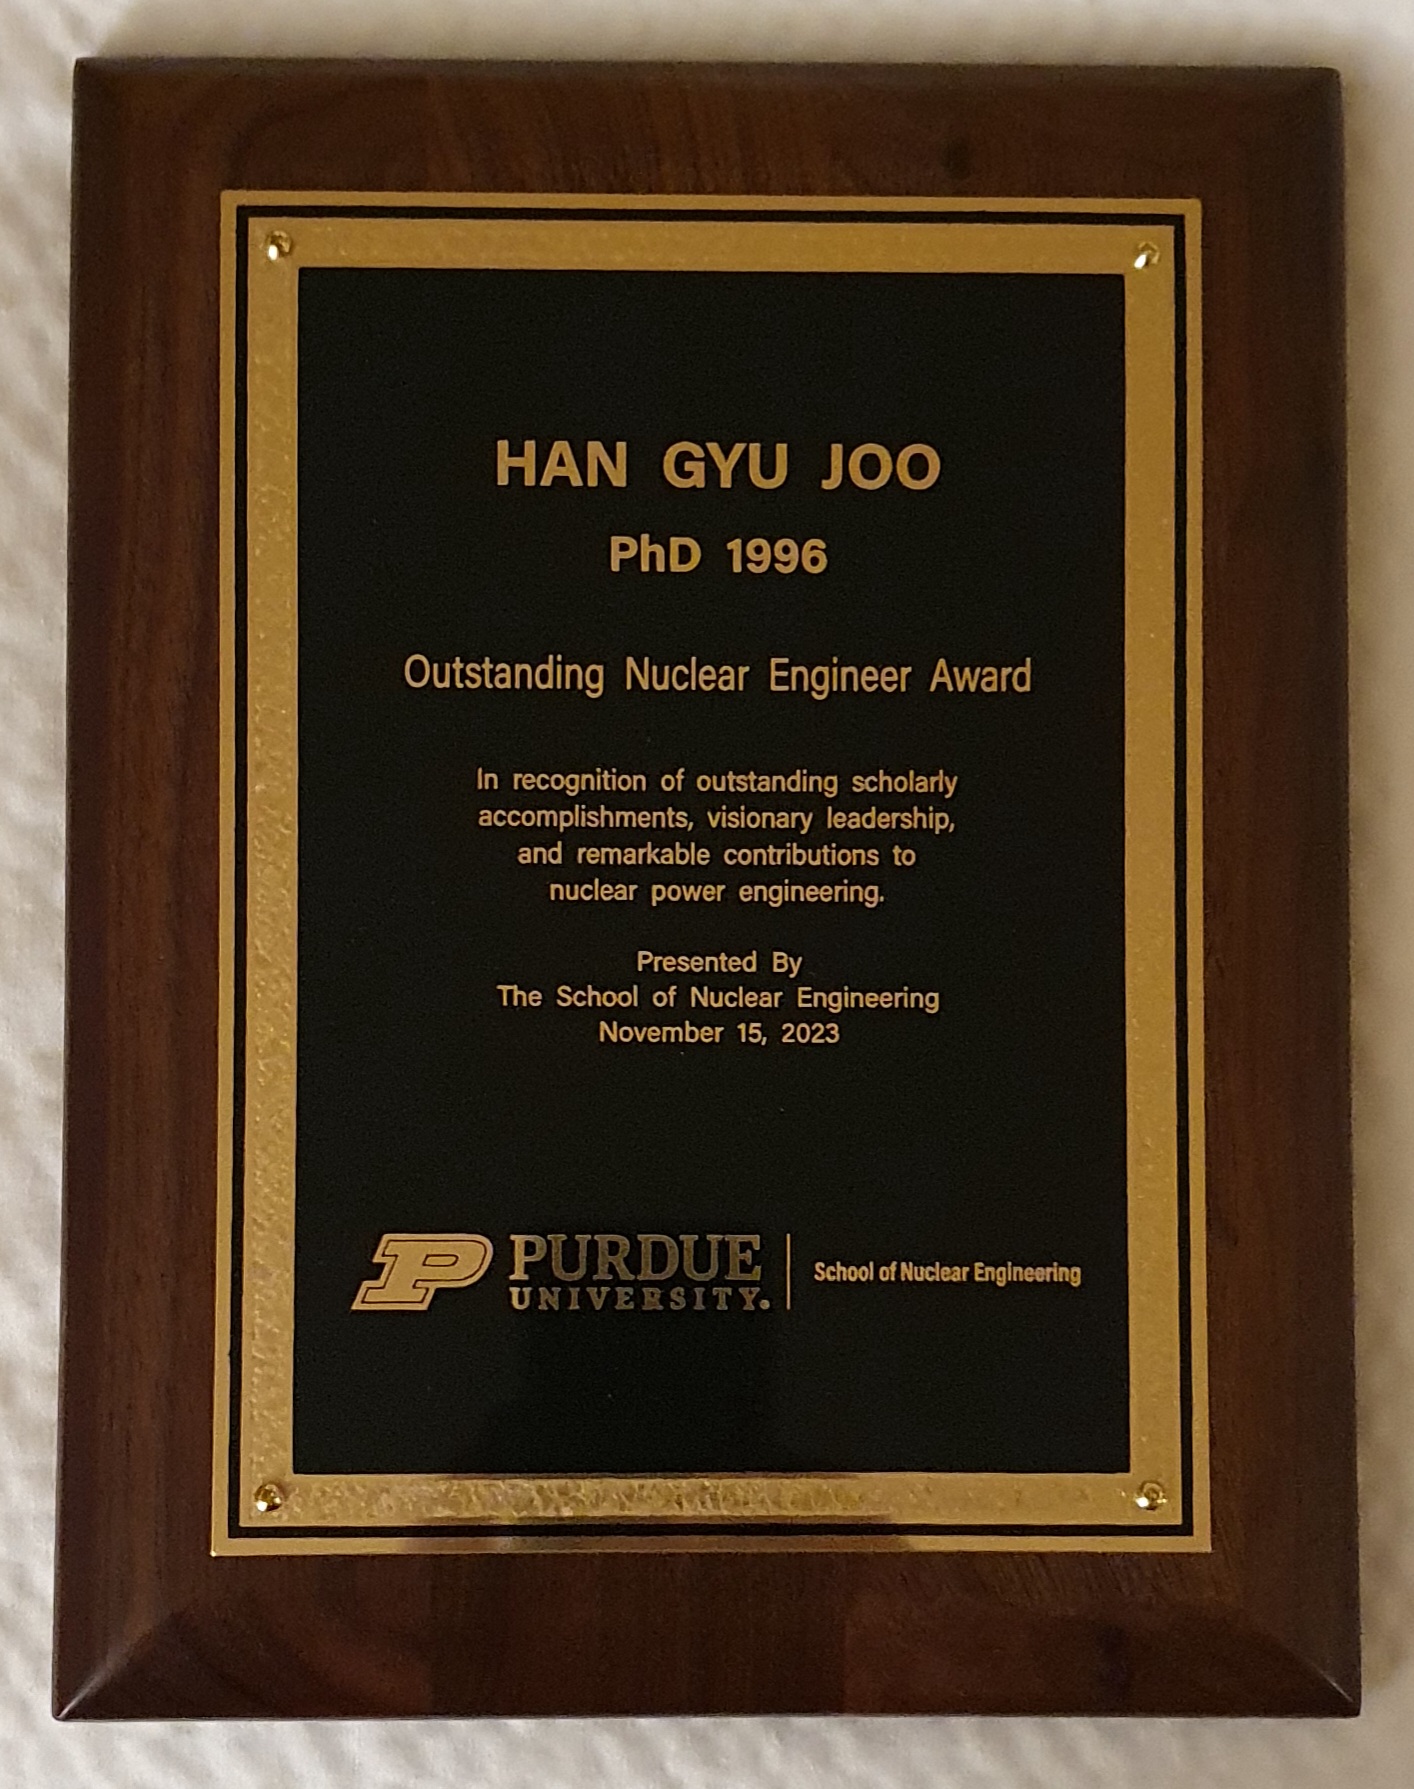 KAERI President receives Outstanding Nuclear Engineer Award